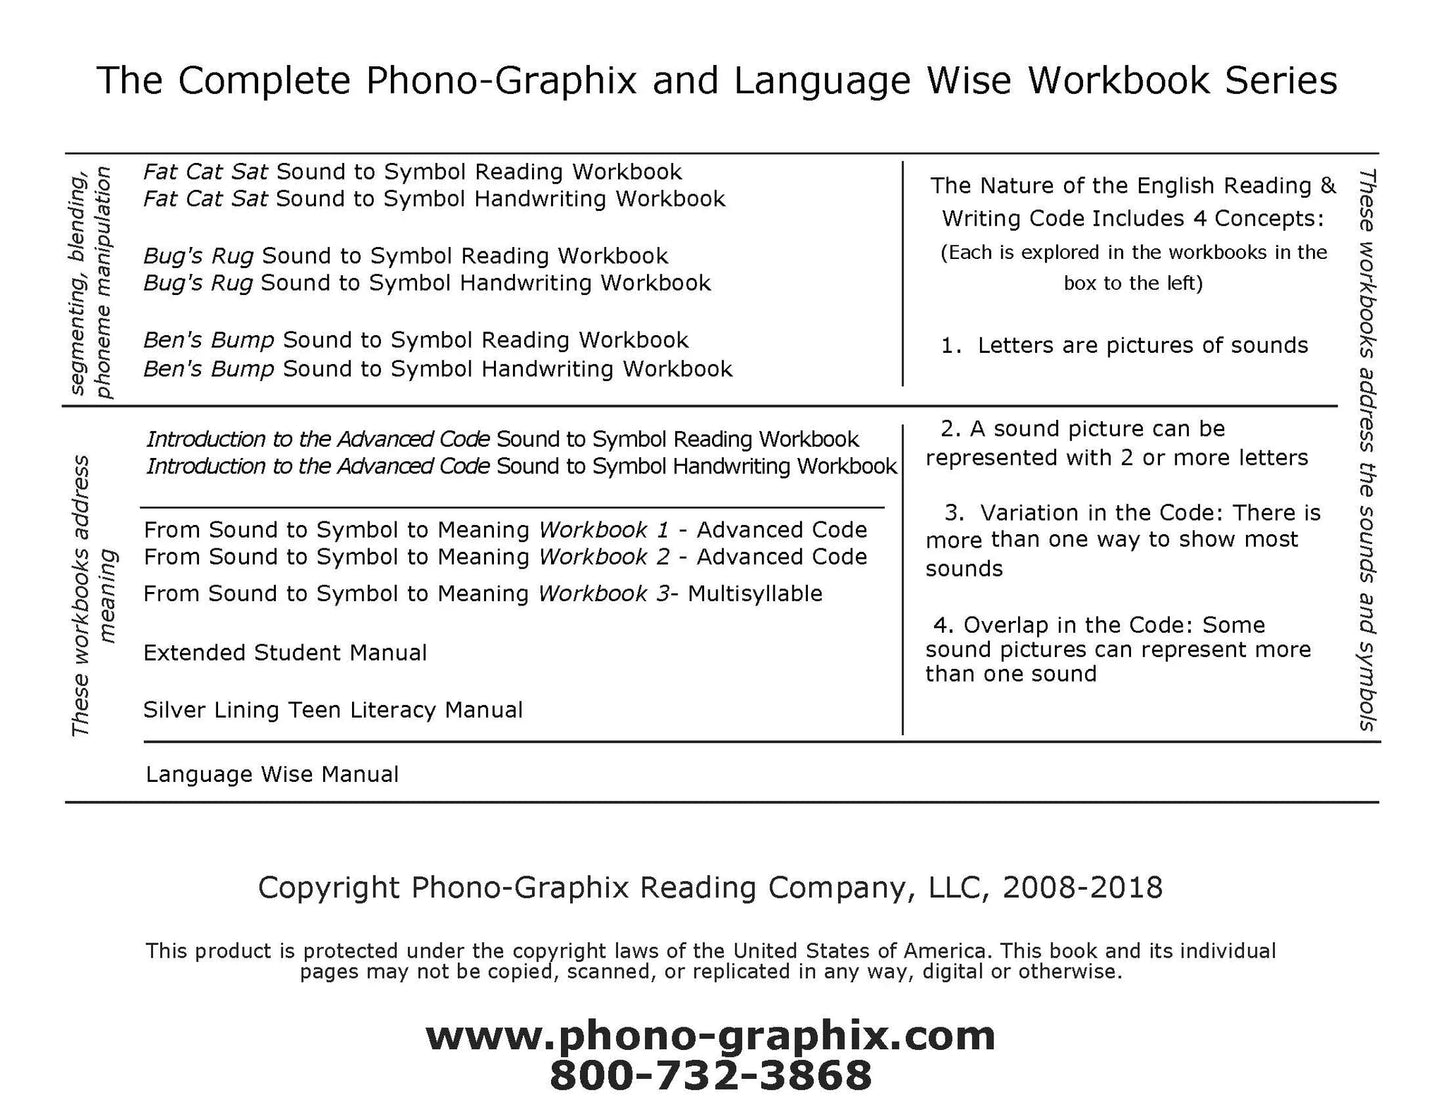 Sound to Symbol to Meaning Workbook Set - Licensed PDF